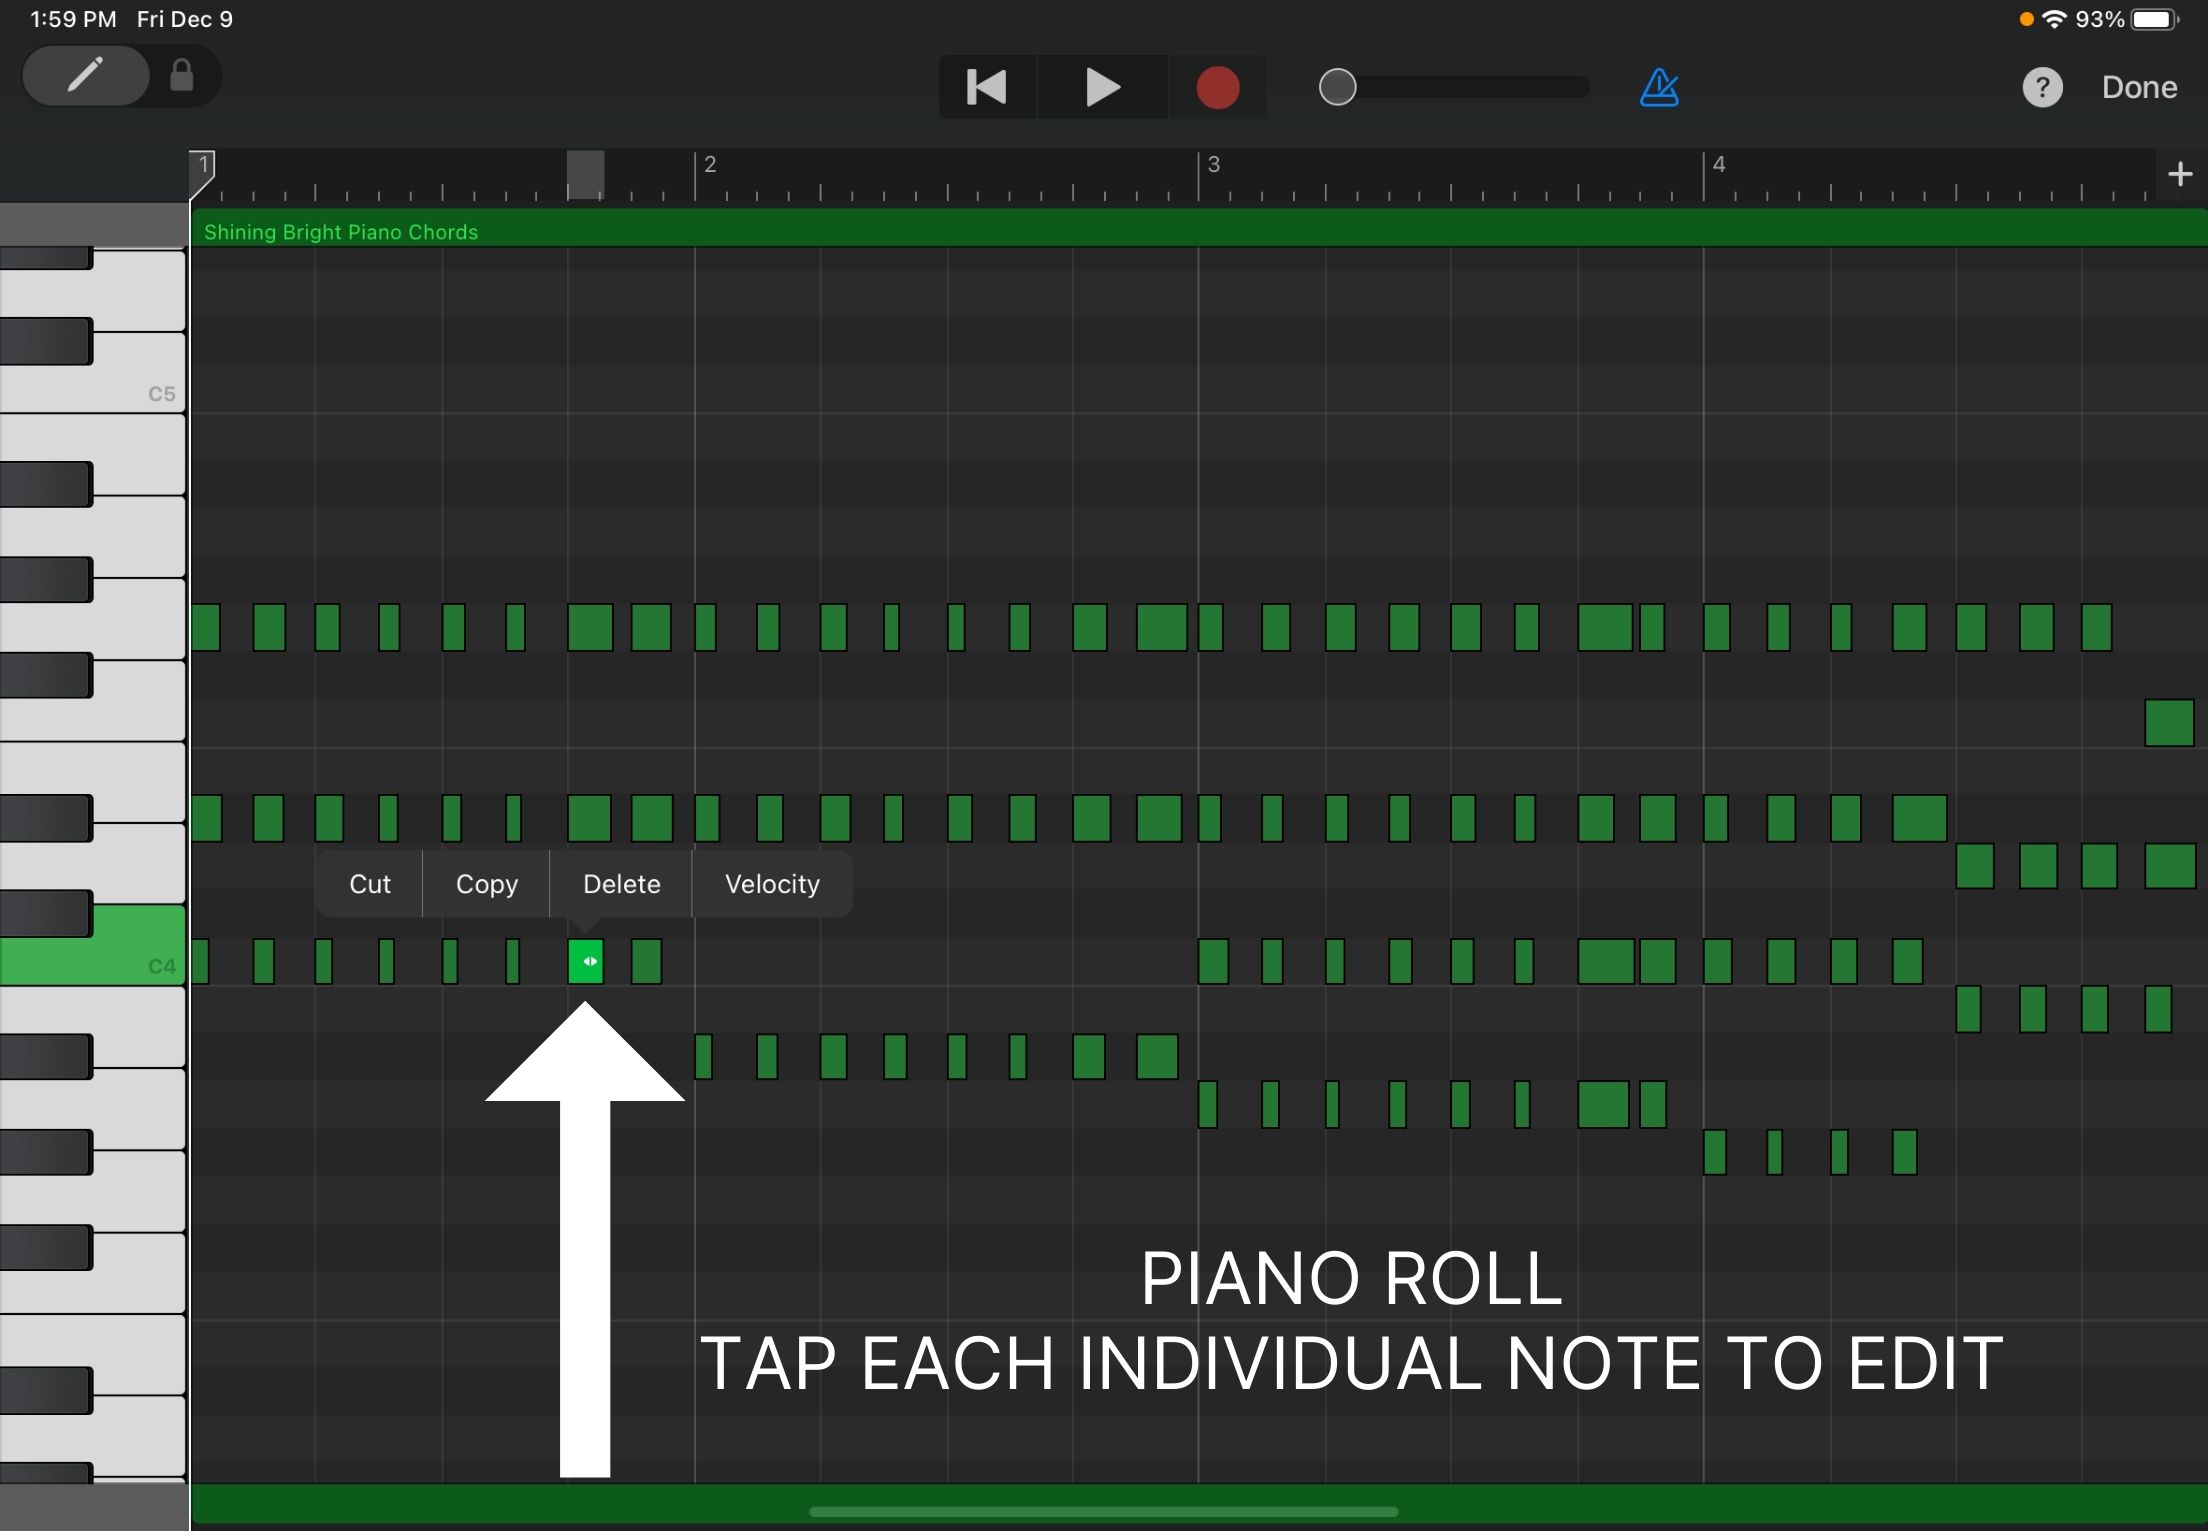 Edit Notes in the MIDI Piano Roll